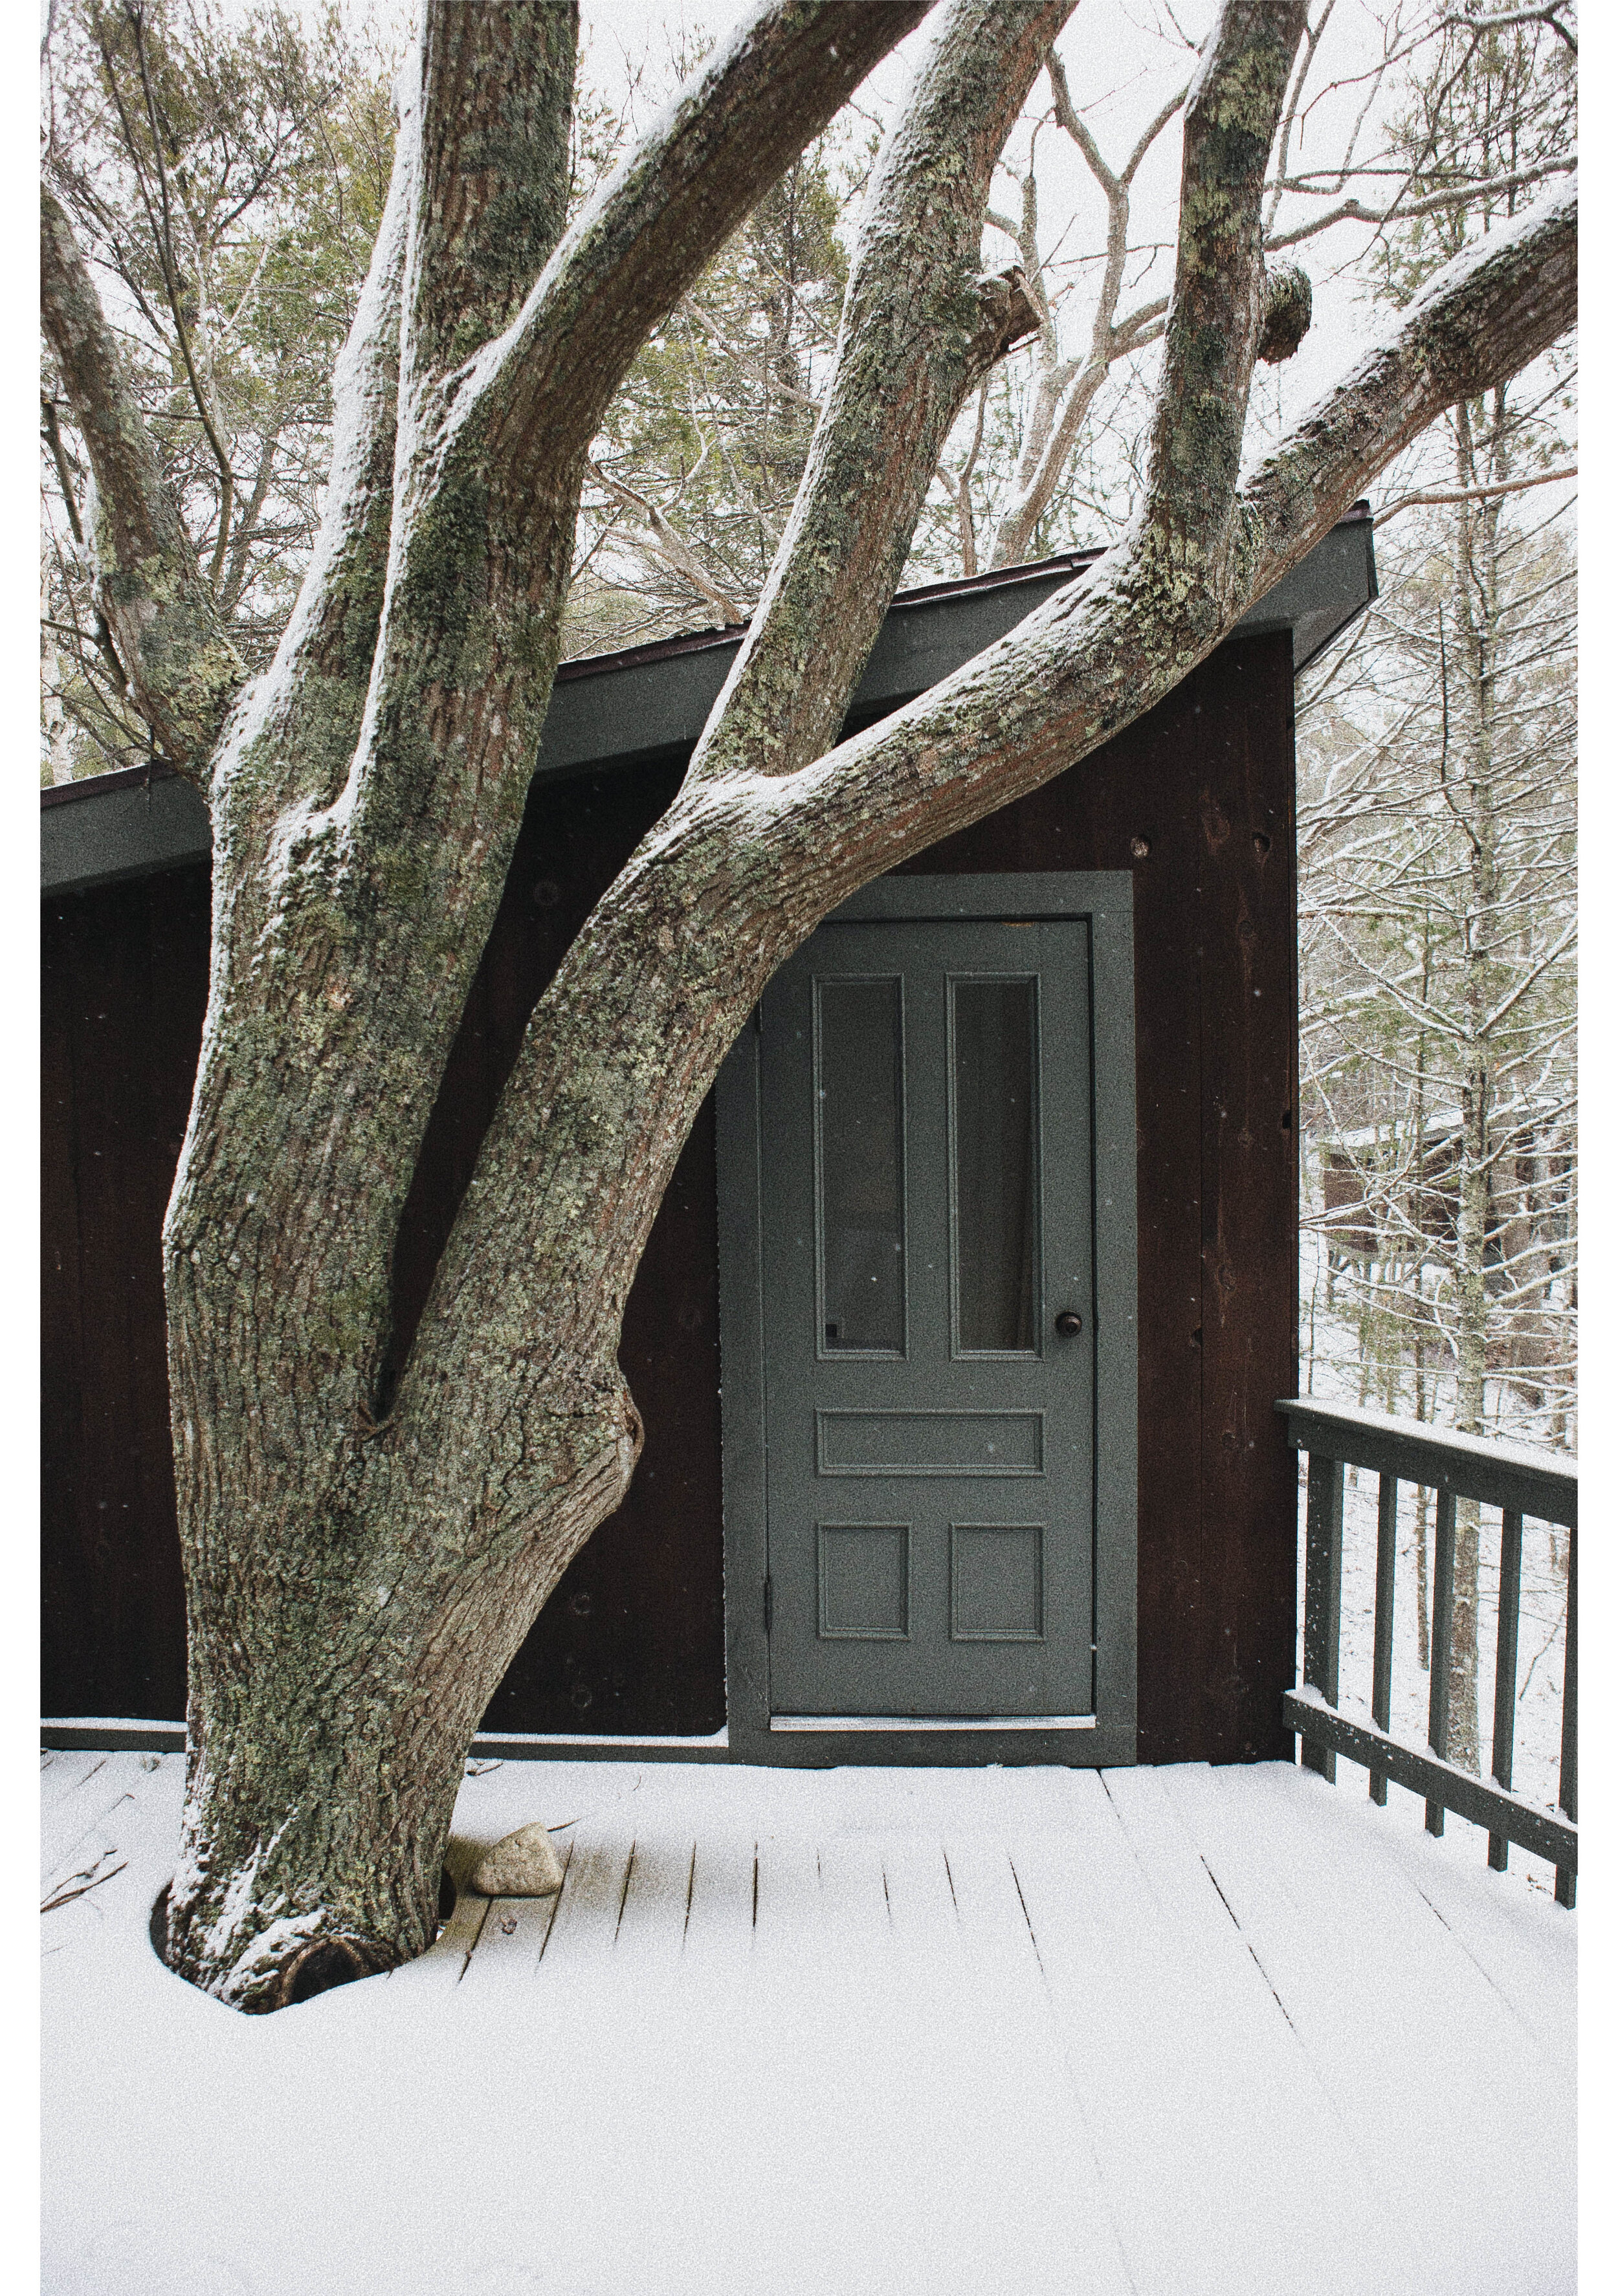 Treehouse Winter Tree Deck